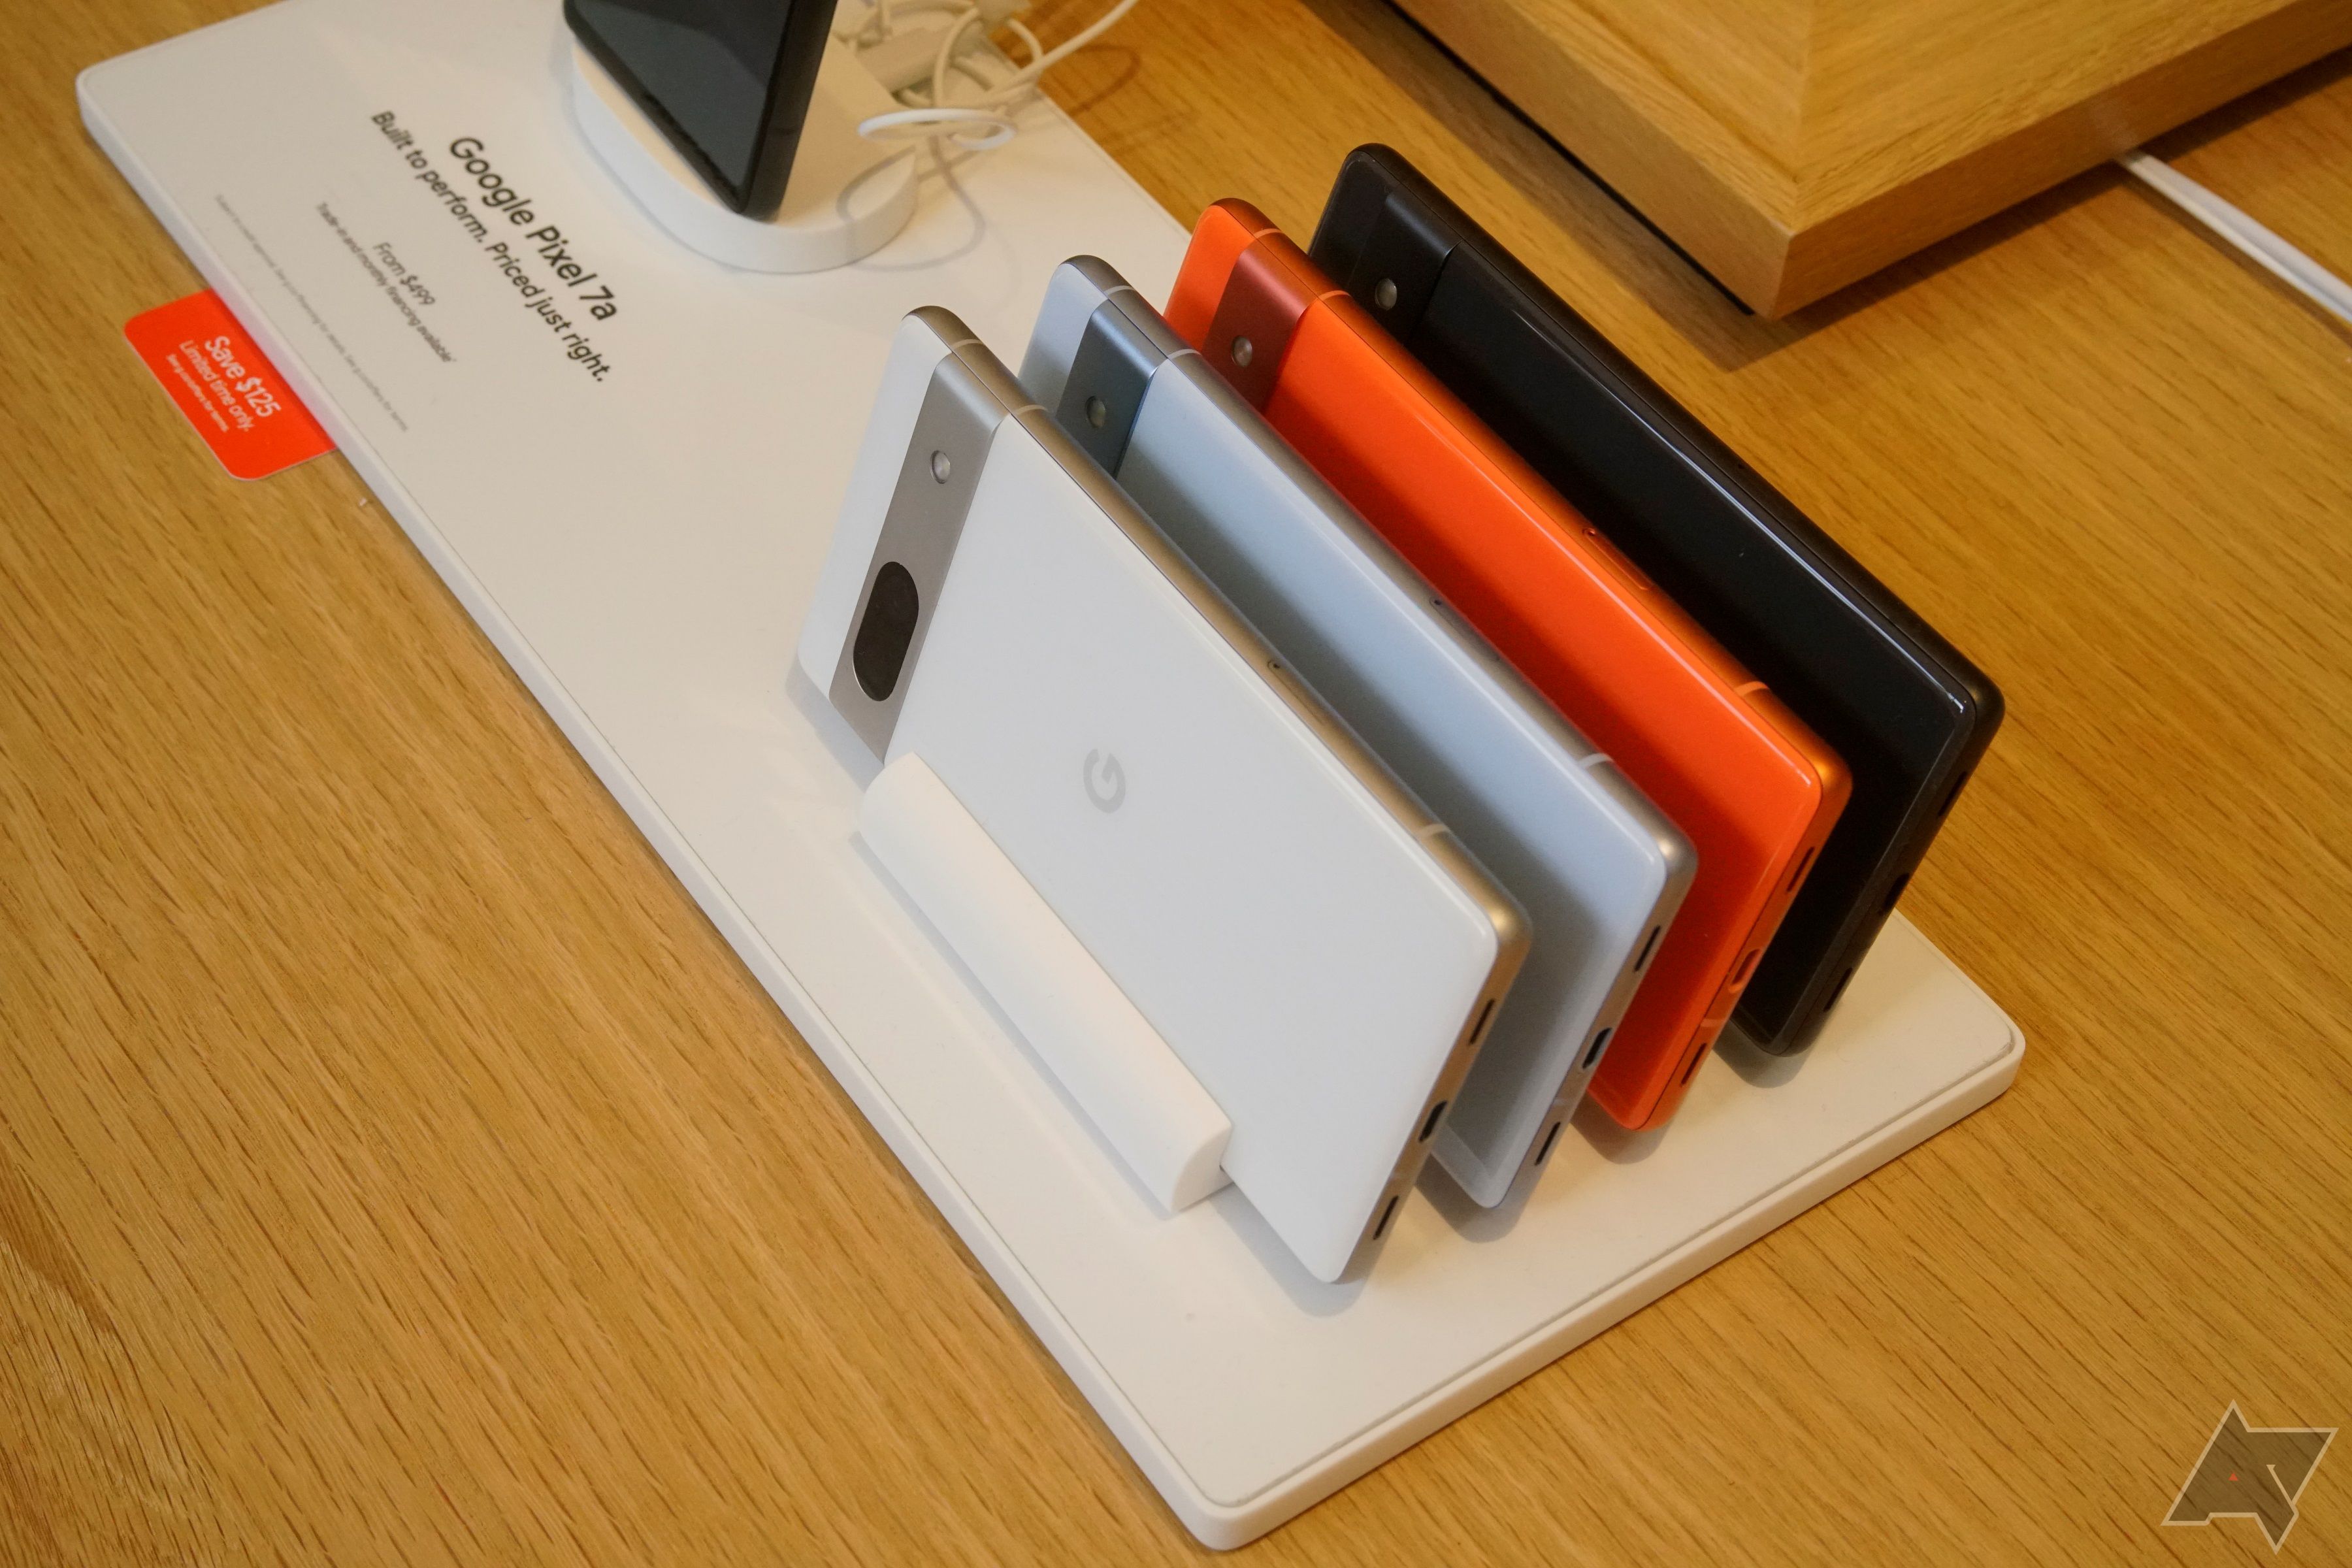 Um conjunto de quatro smartphones Pixel 7a sobre uma mesa.